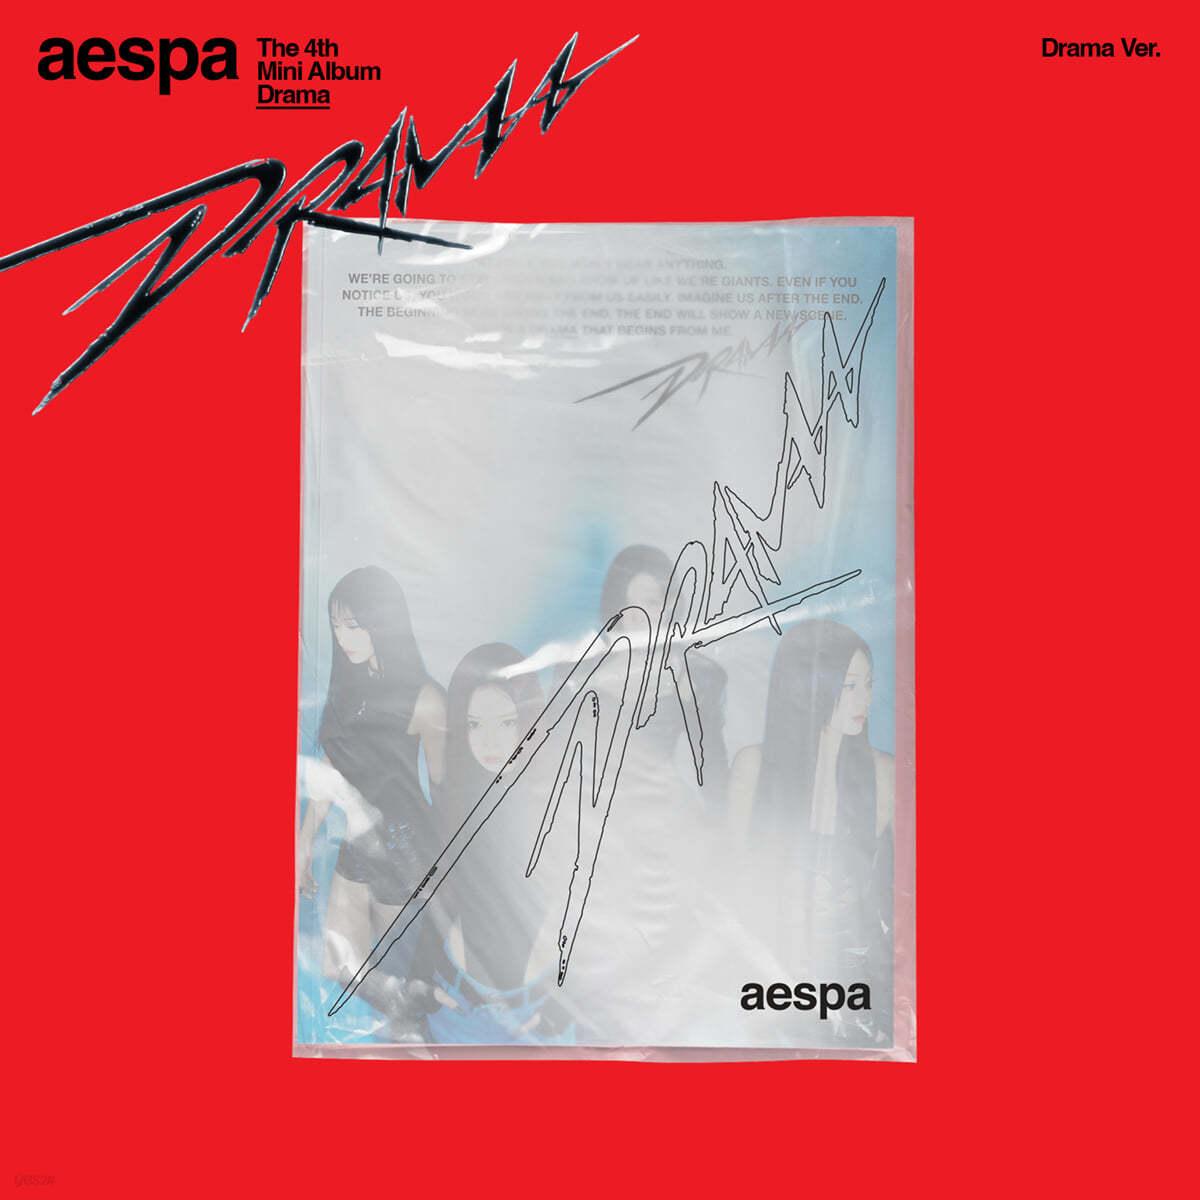 AESPA 4th Mini Album 'Drama' (Drama Ver.) - KKANG